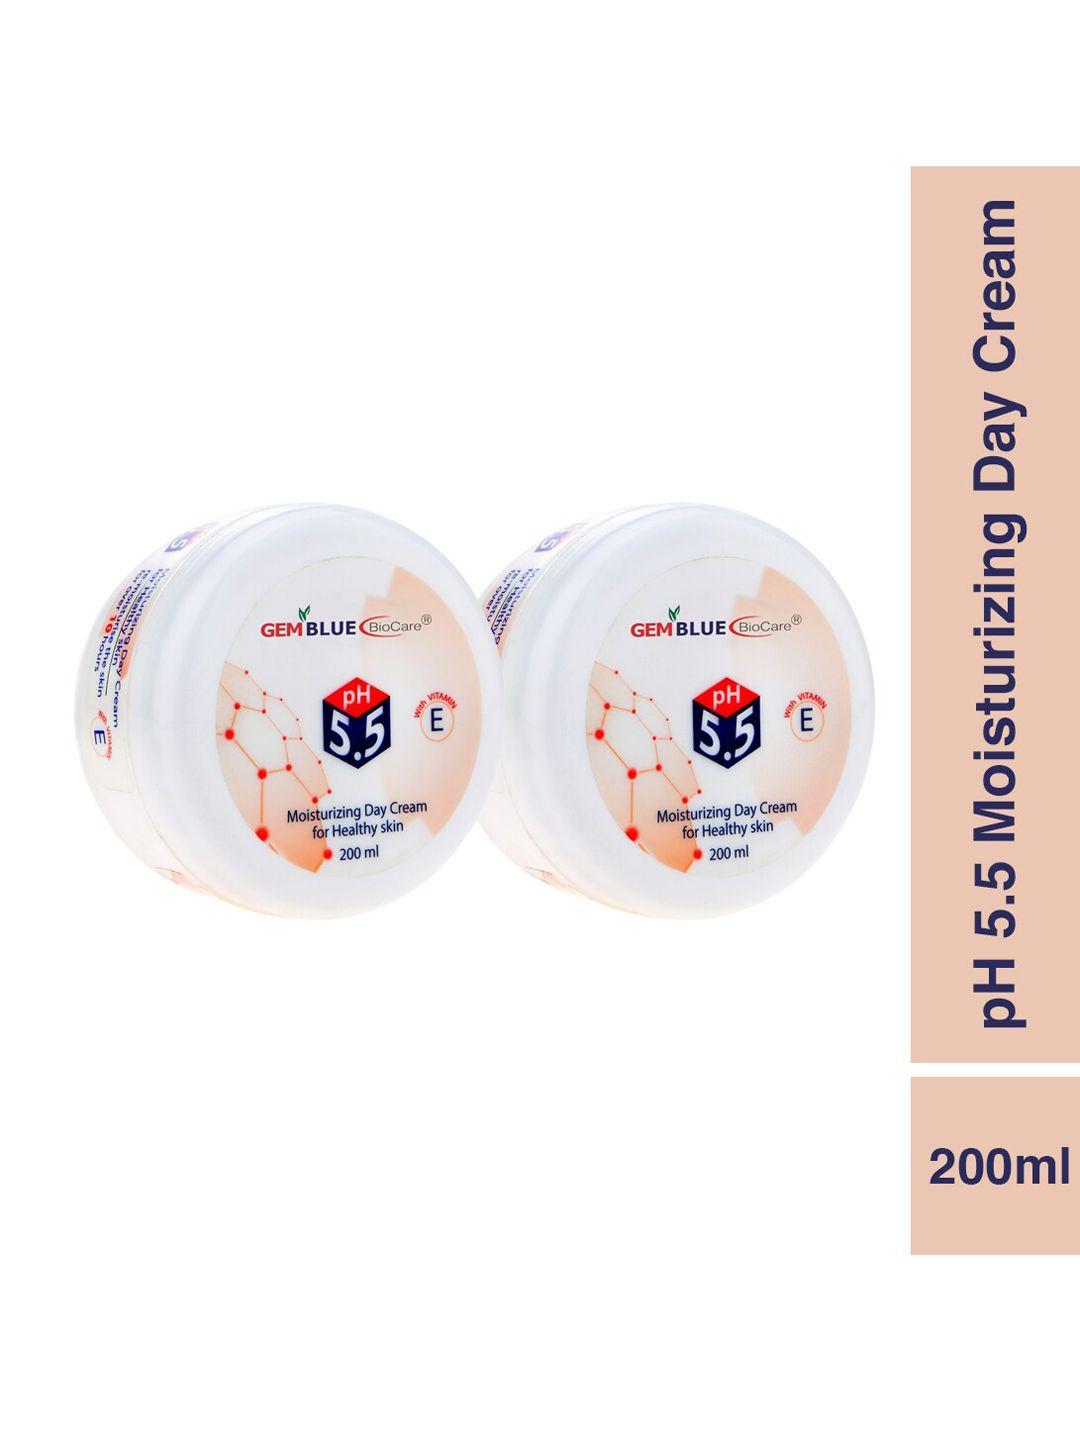 gemblue biocare set of 2 moisturizing day cream 200ml